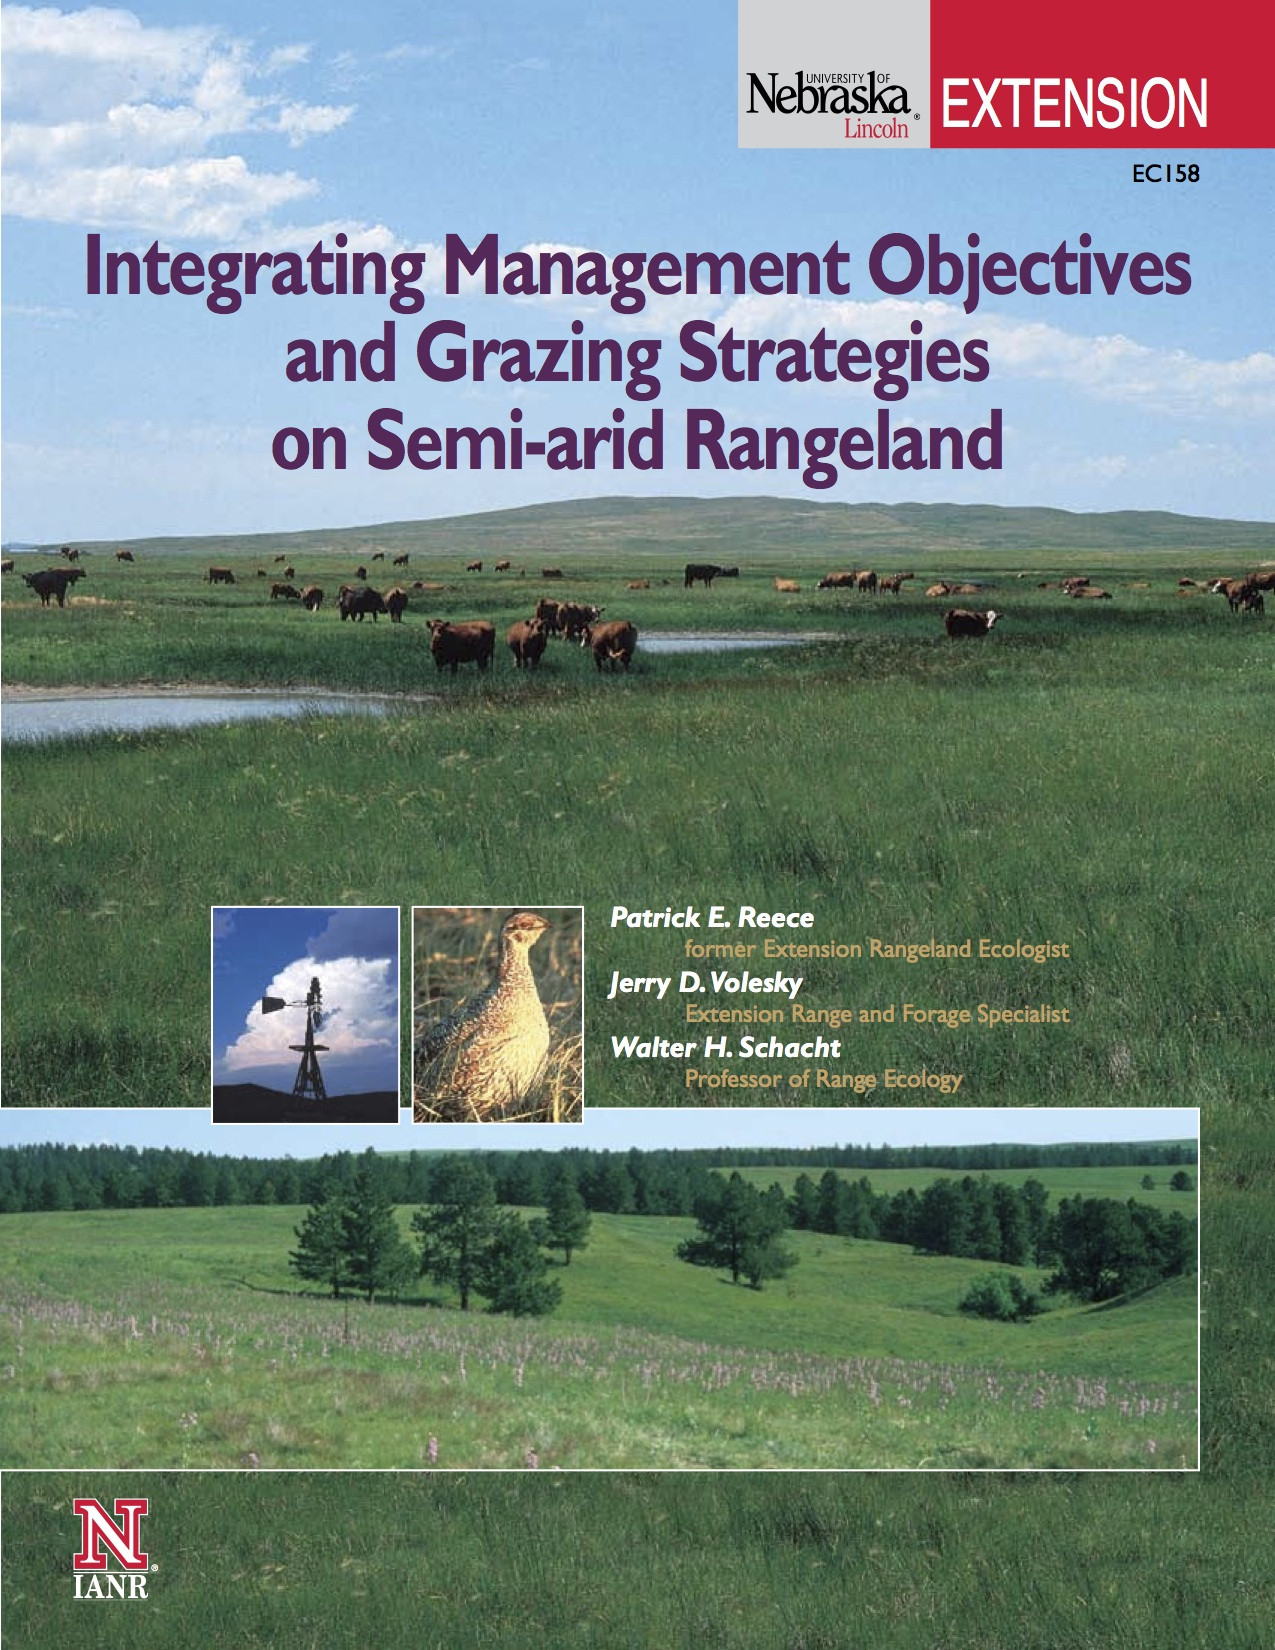 Integrating Management Objectives and Grazing Strategies on Semiarid Rangeland